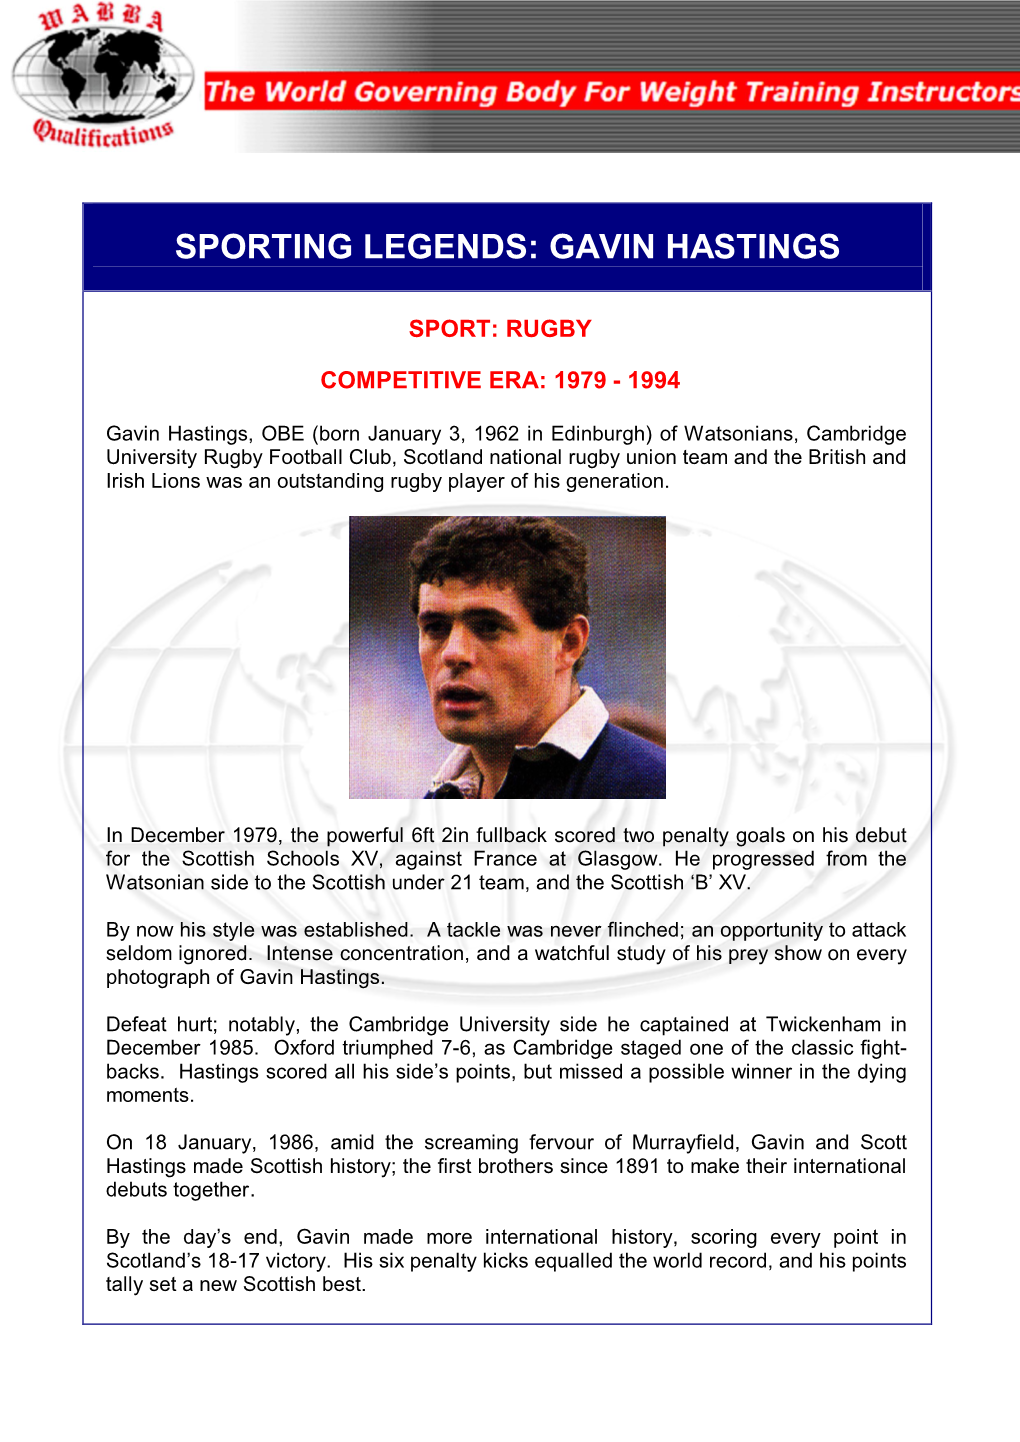 Sporting Legends: Gavin Hastings